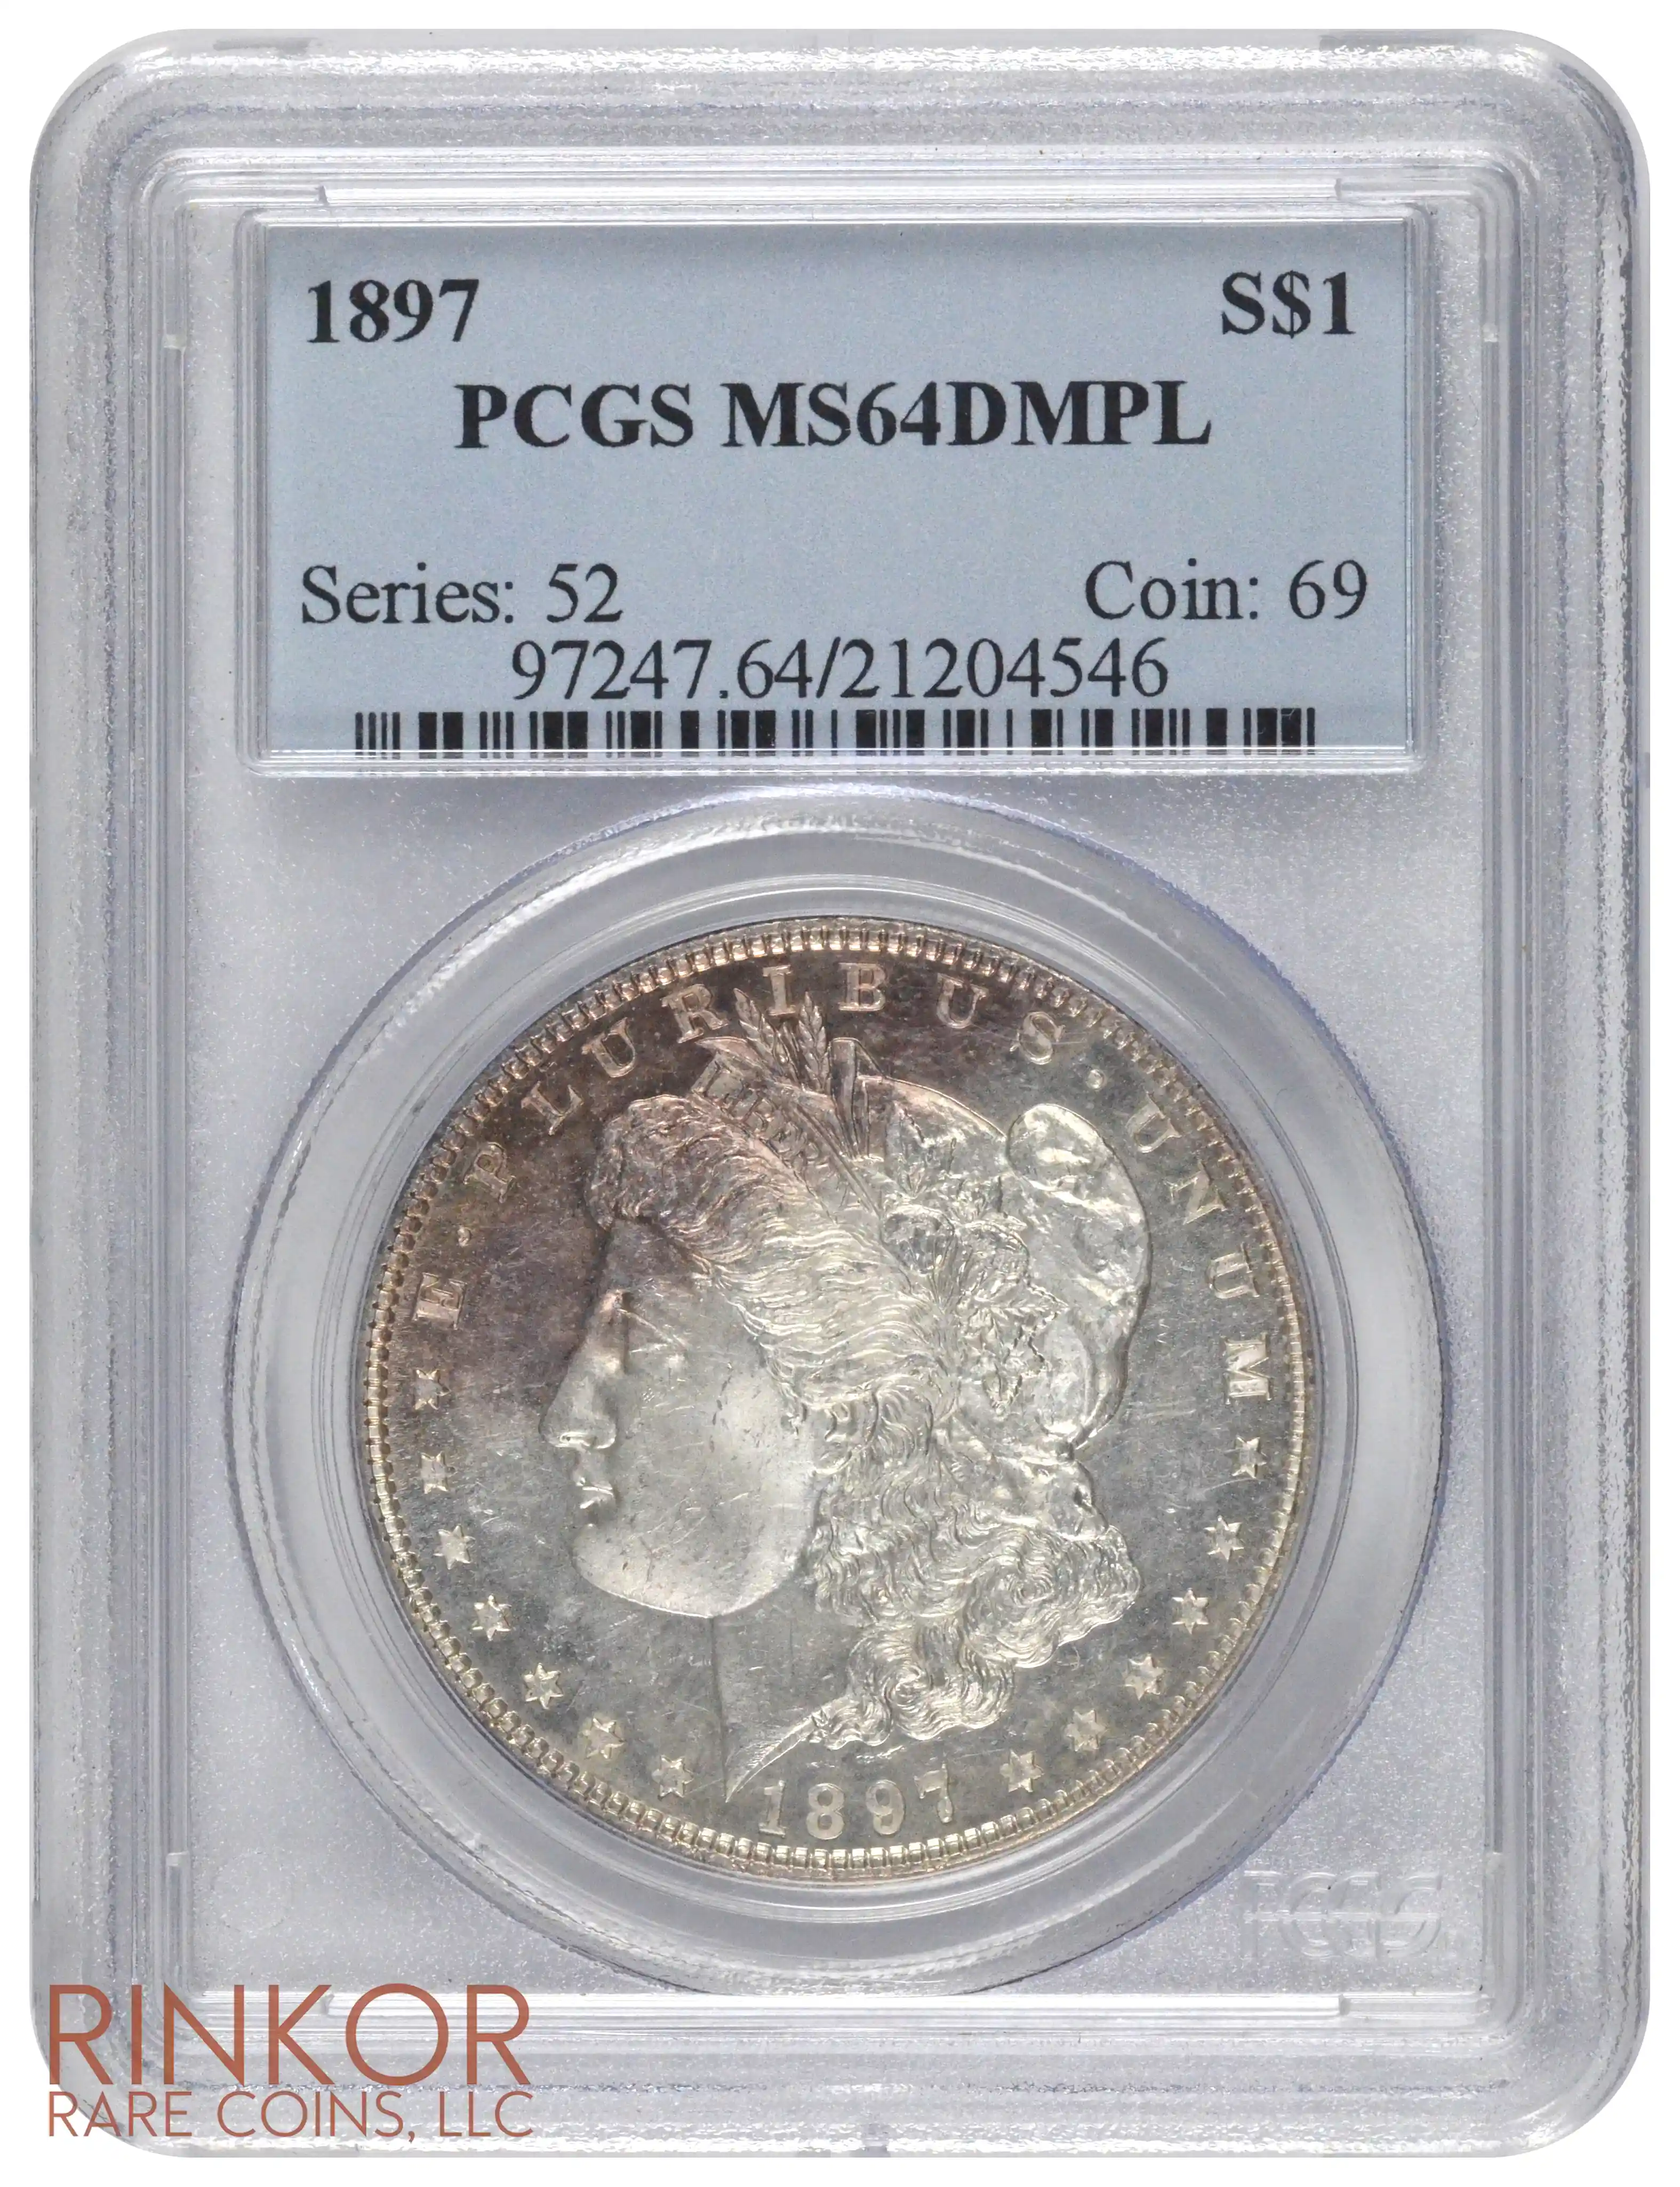 1897 $1 PCGS MS 64 DMPL 